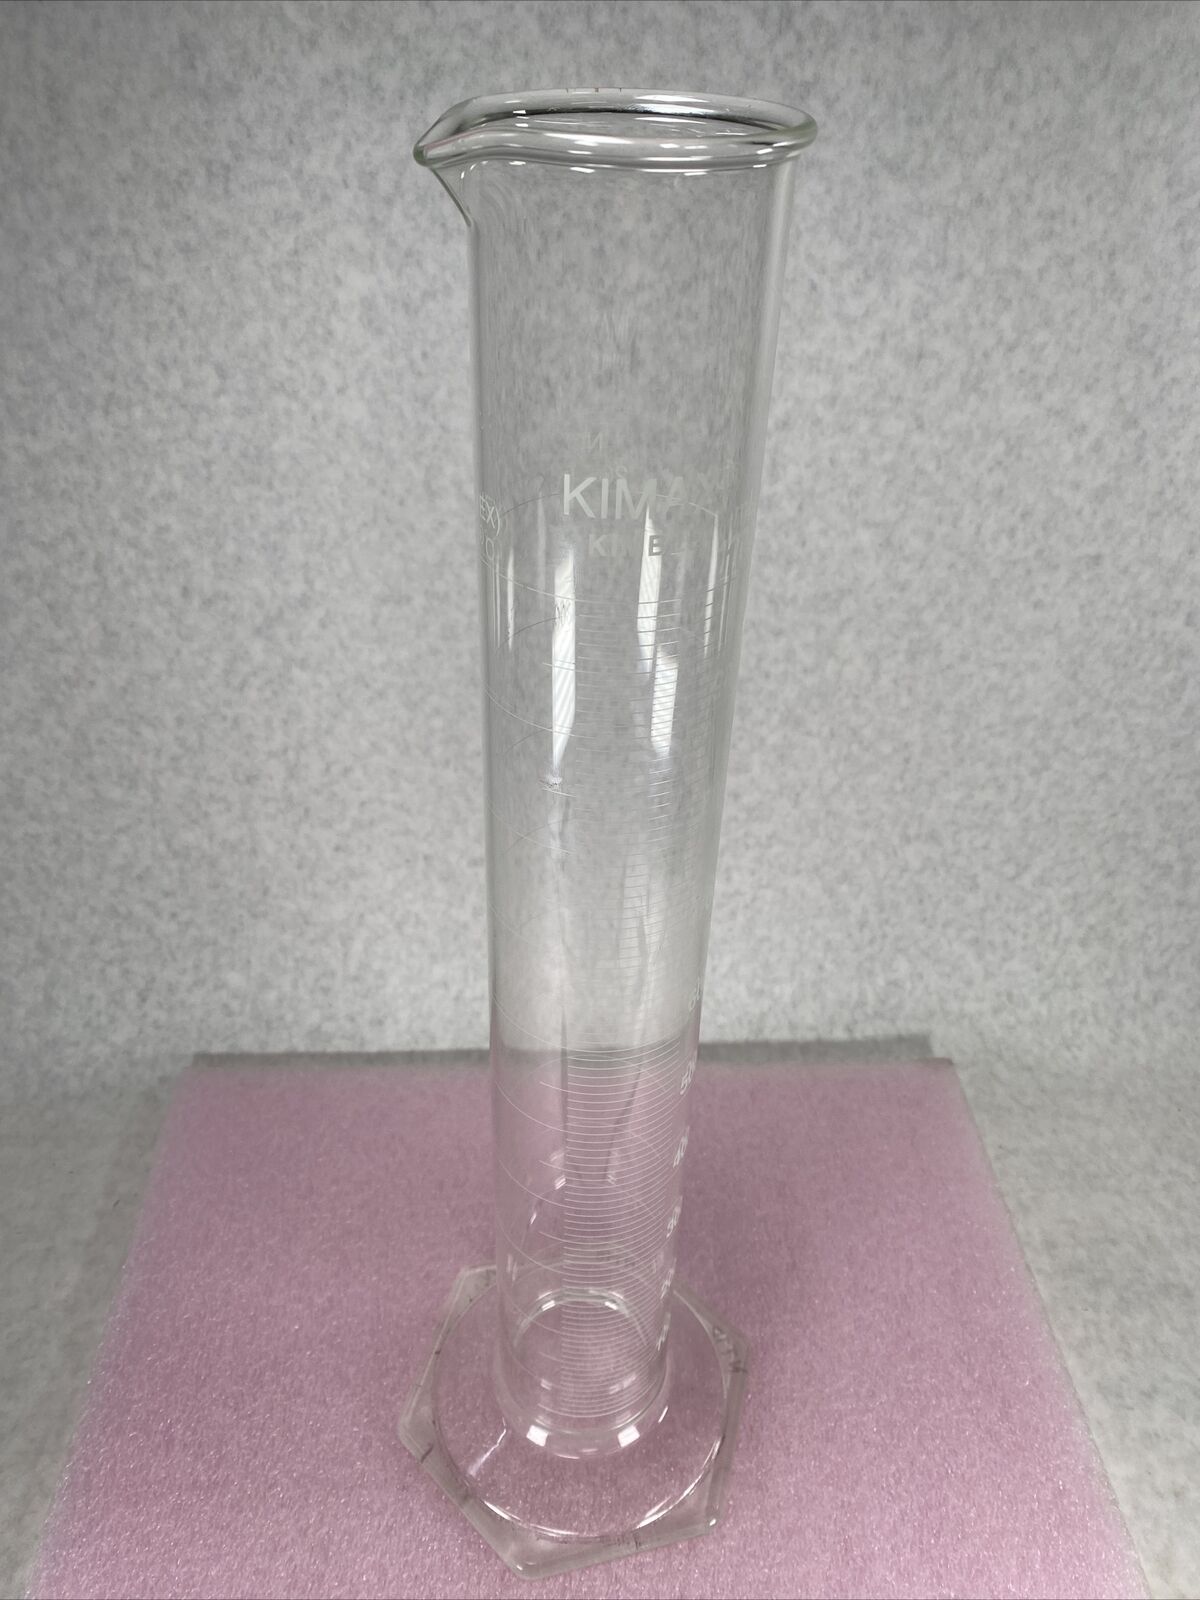 Kimble 20025-K Kimax Borosilicate Glass Metric Graduated Cylinder Hex 1000 mL